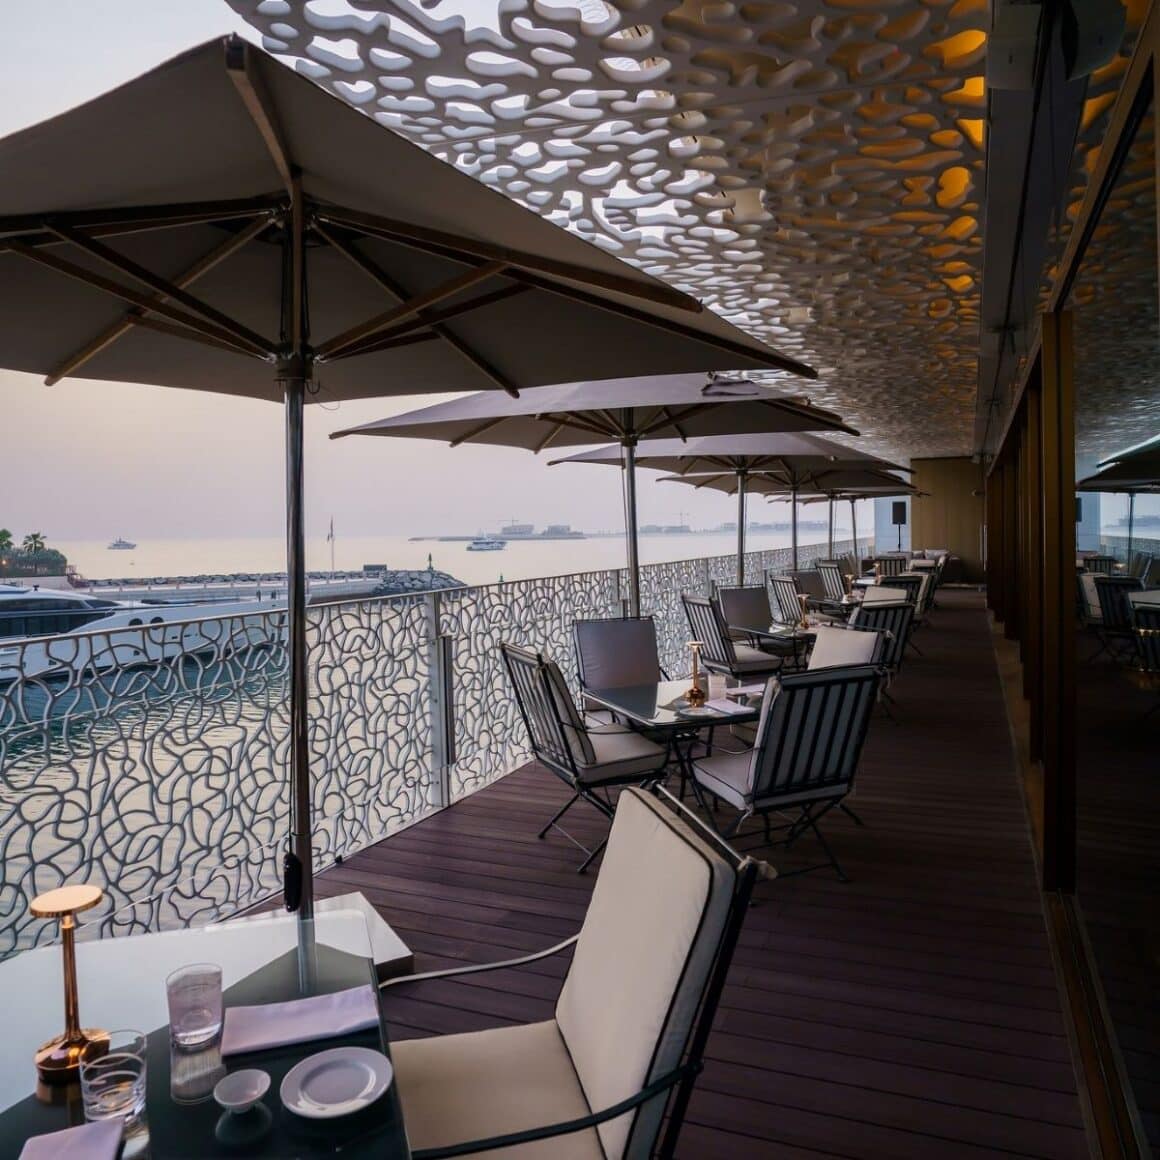 terasa restaurantrului niko romito din dubai cu umbrelute si mese. Top restaurante Dubai